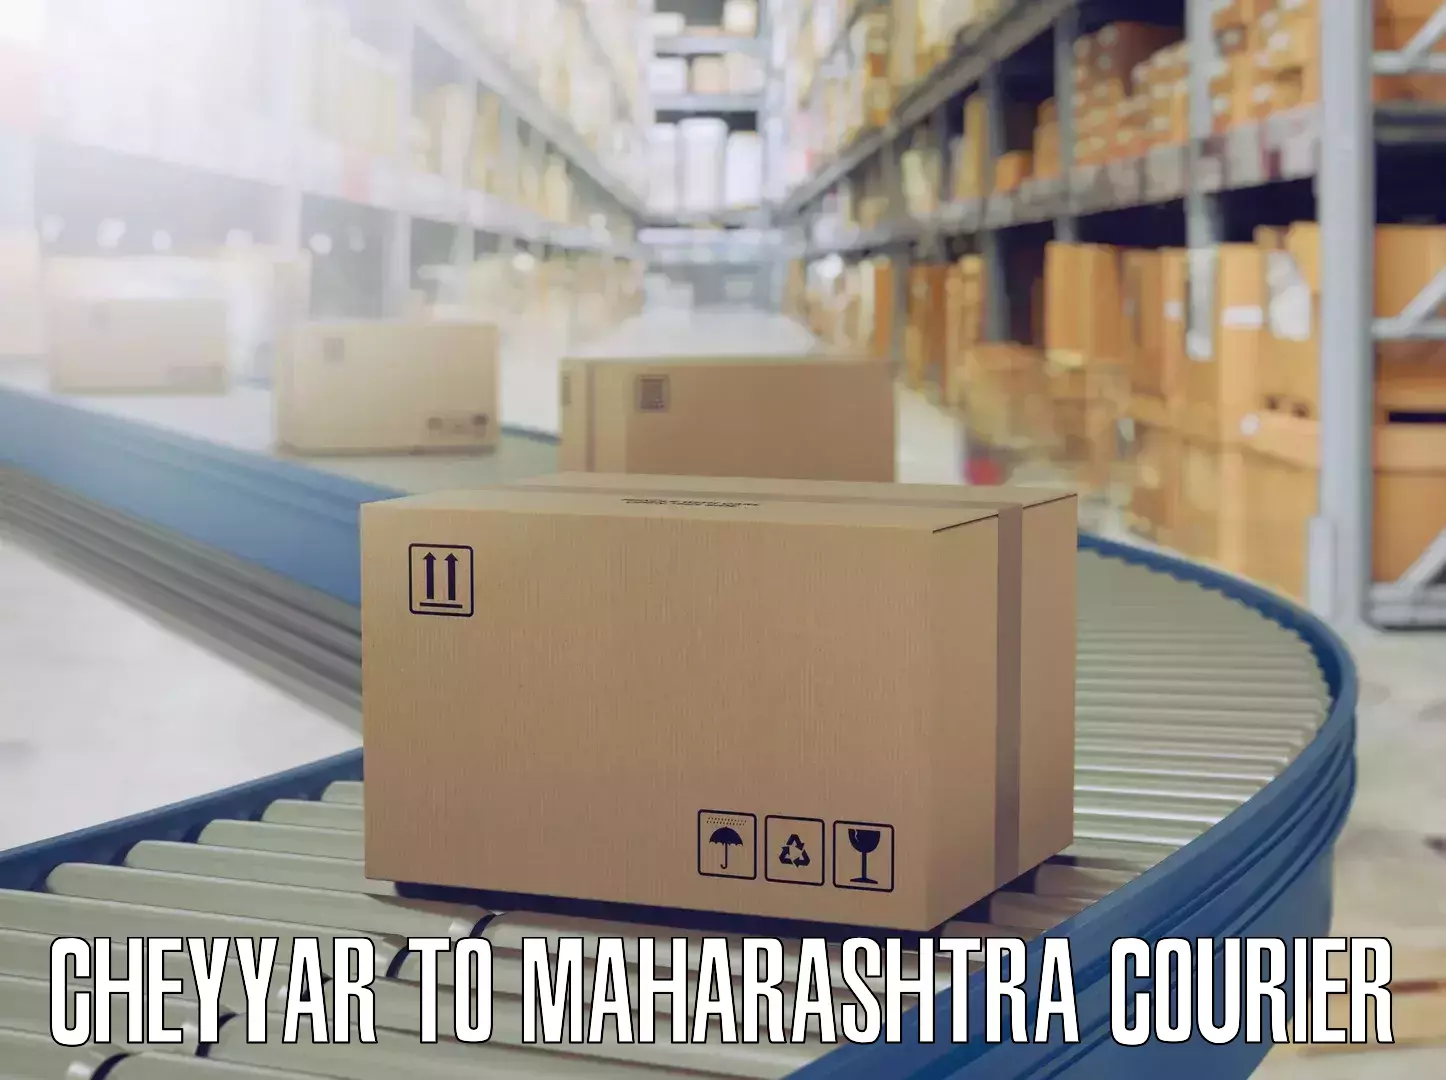 Moving and storage services Cheyyar to Maharashtra